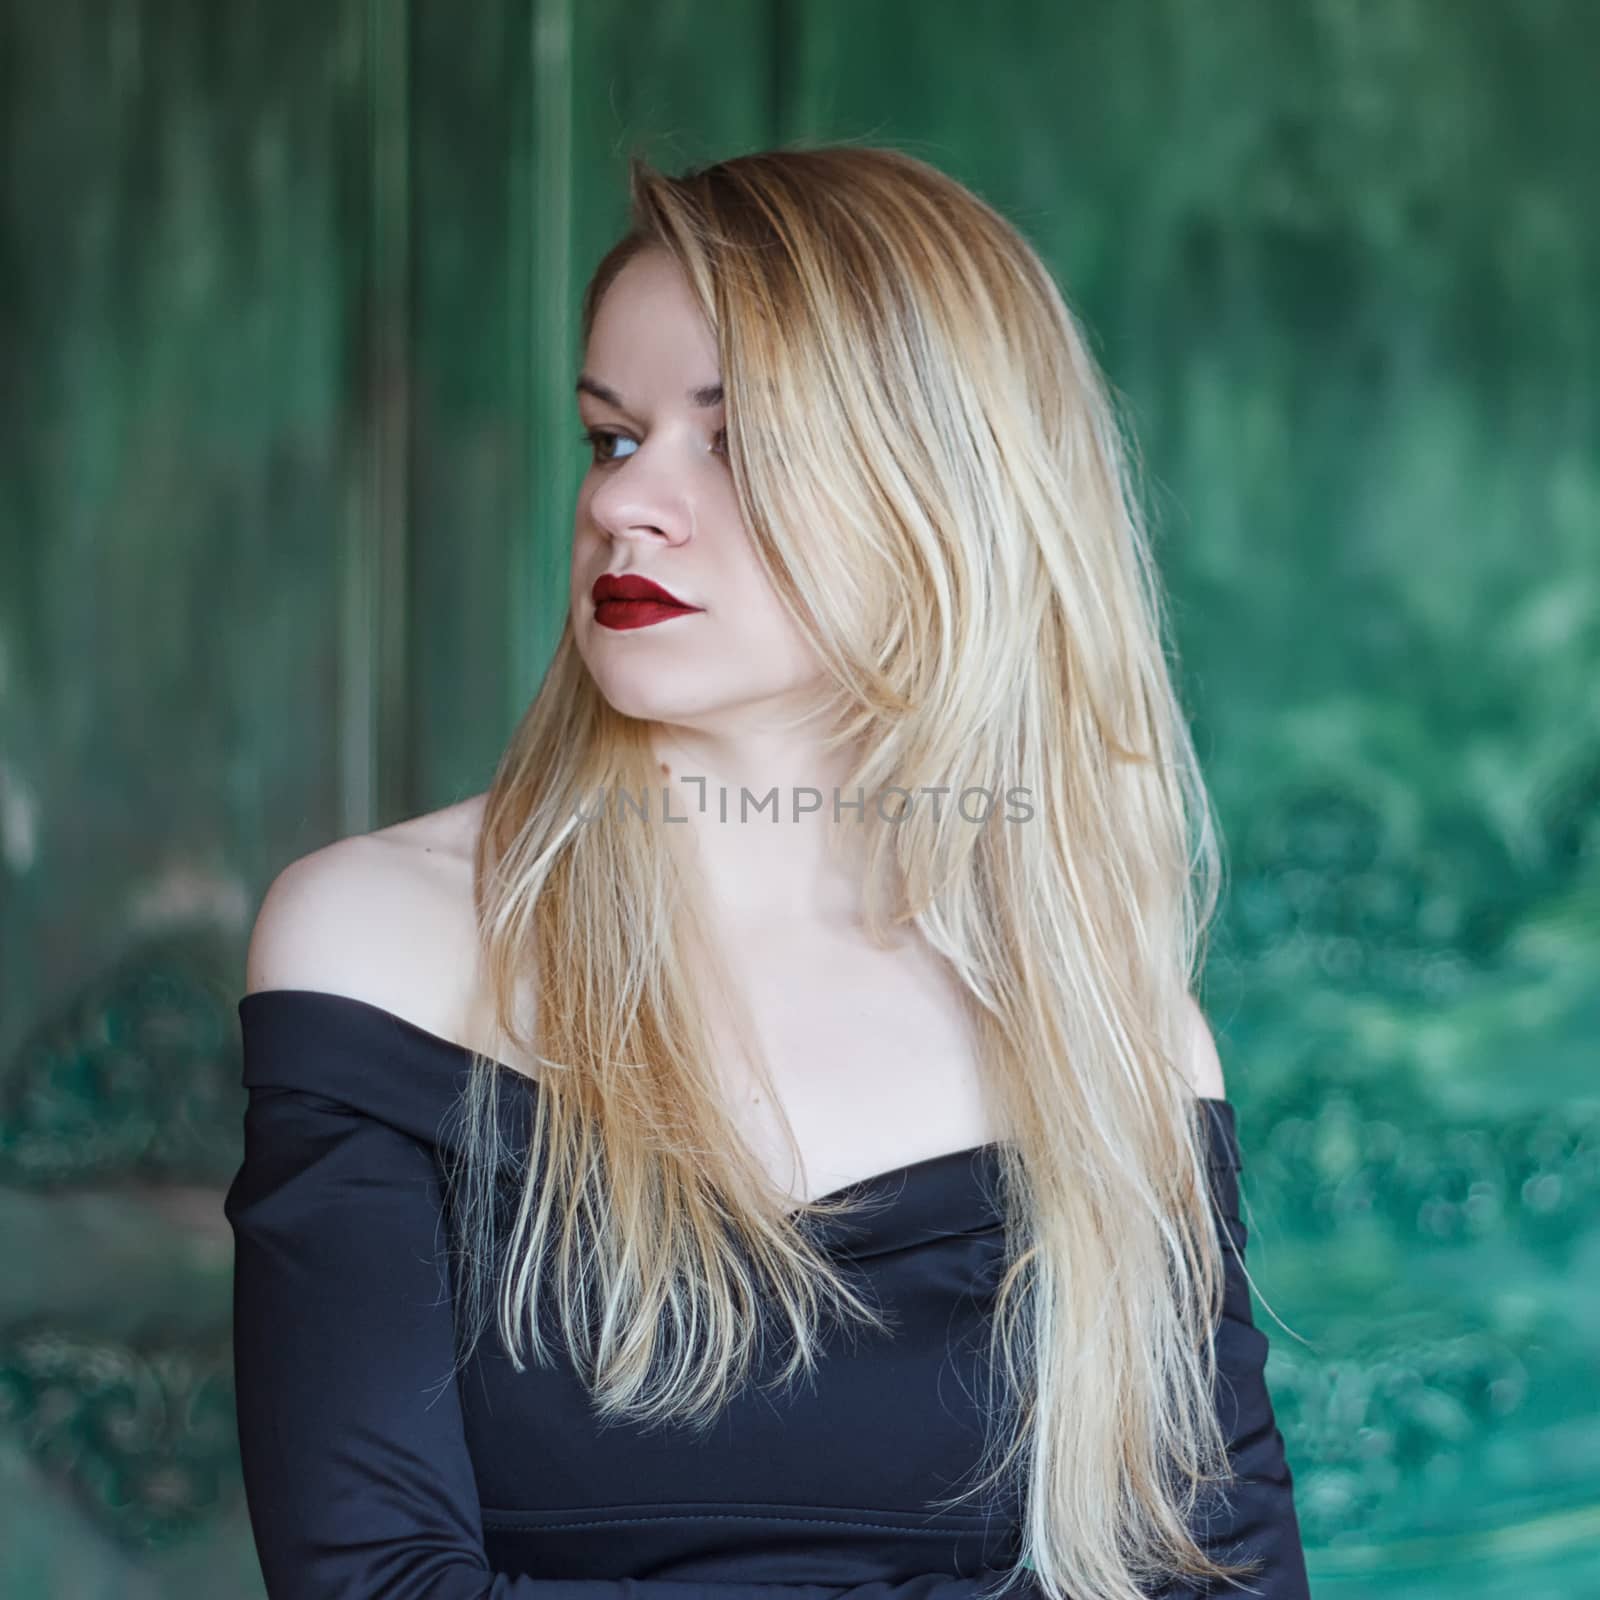 Elegant blonde in a black dress near grunge wall by victosha